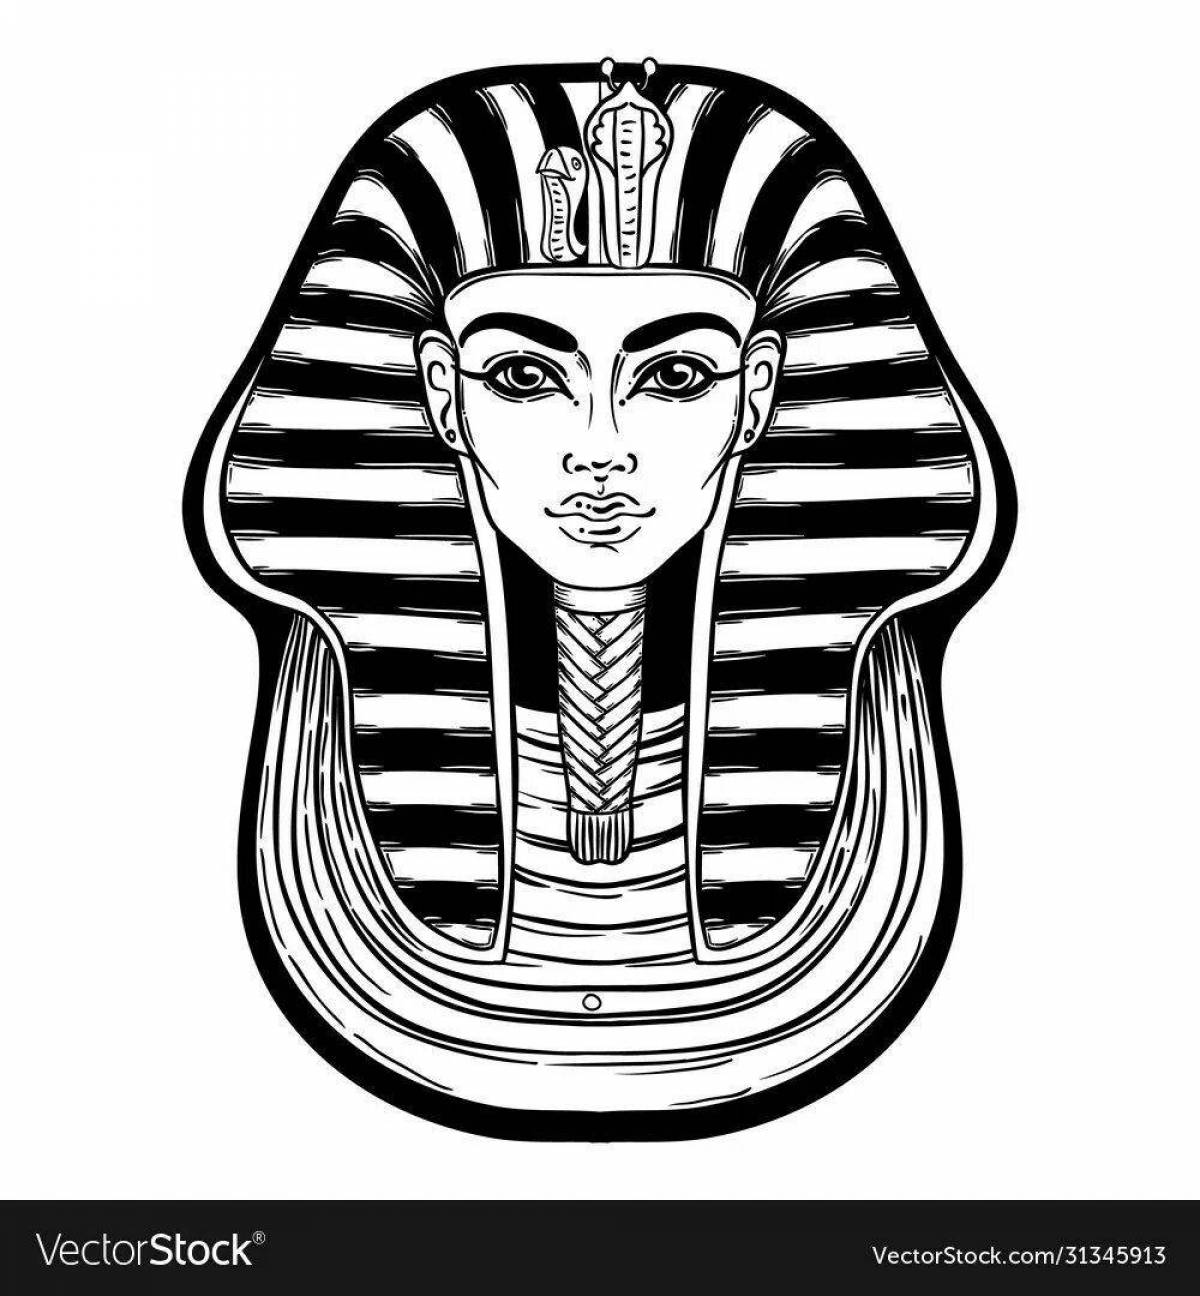 Coloring page decorative pharaoh mask